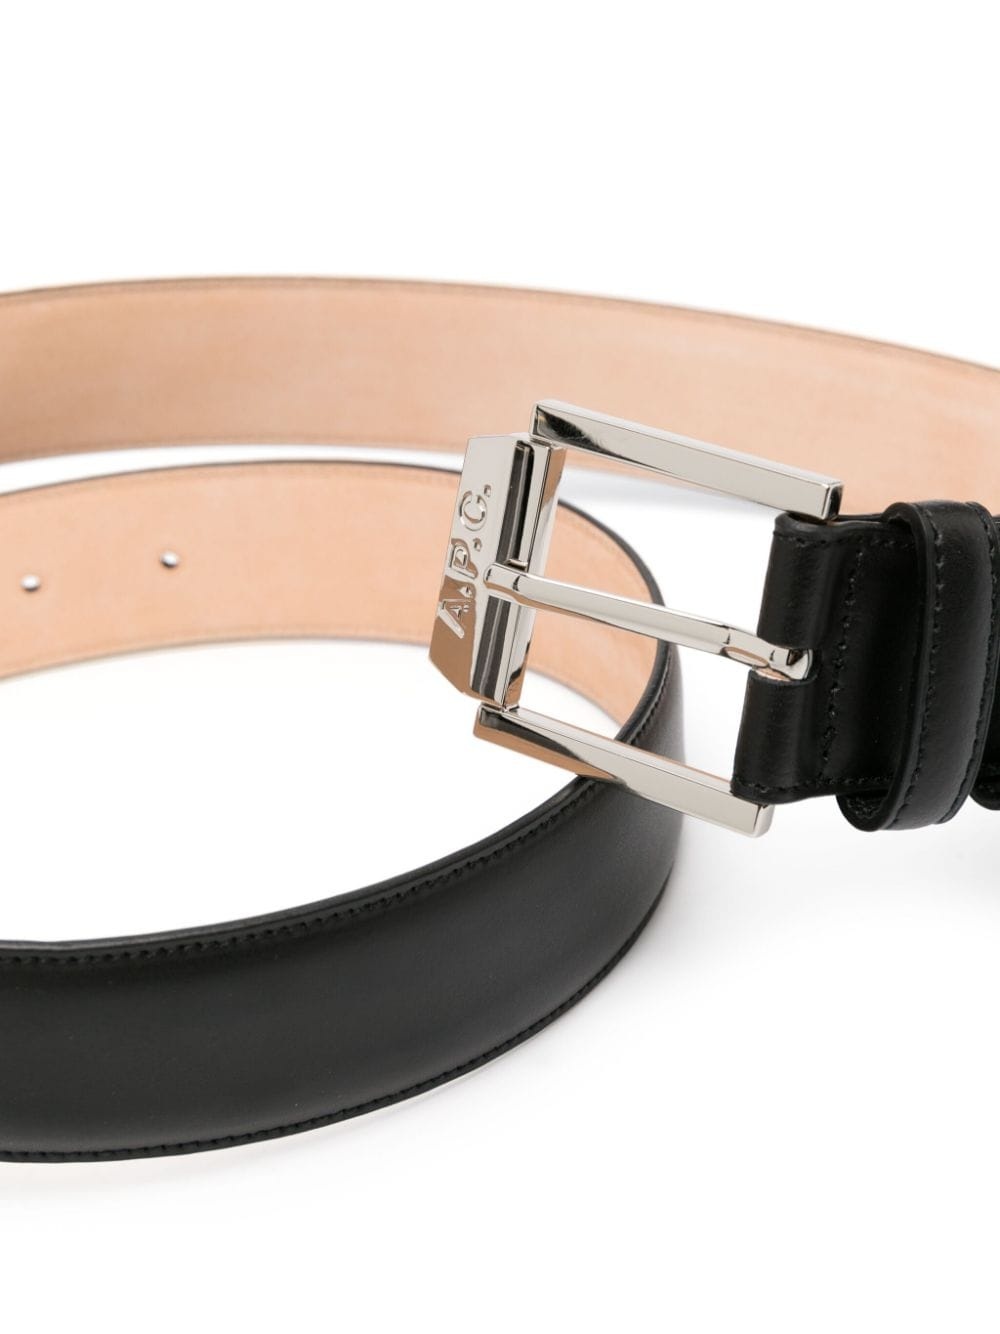 London leather belt - 2